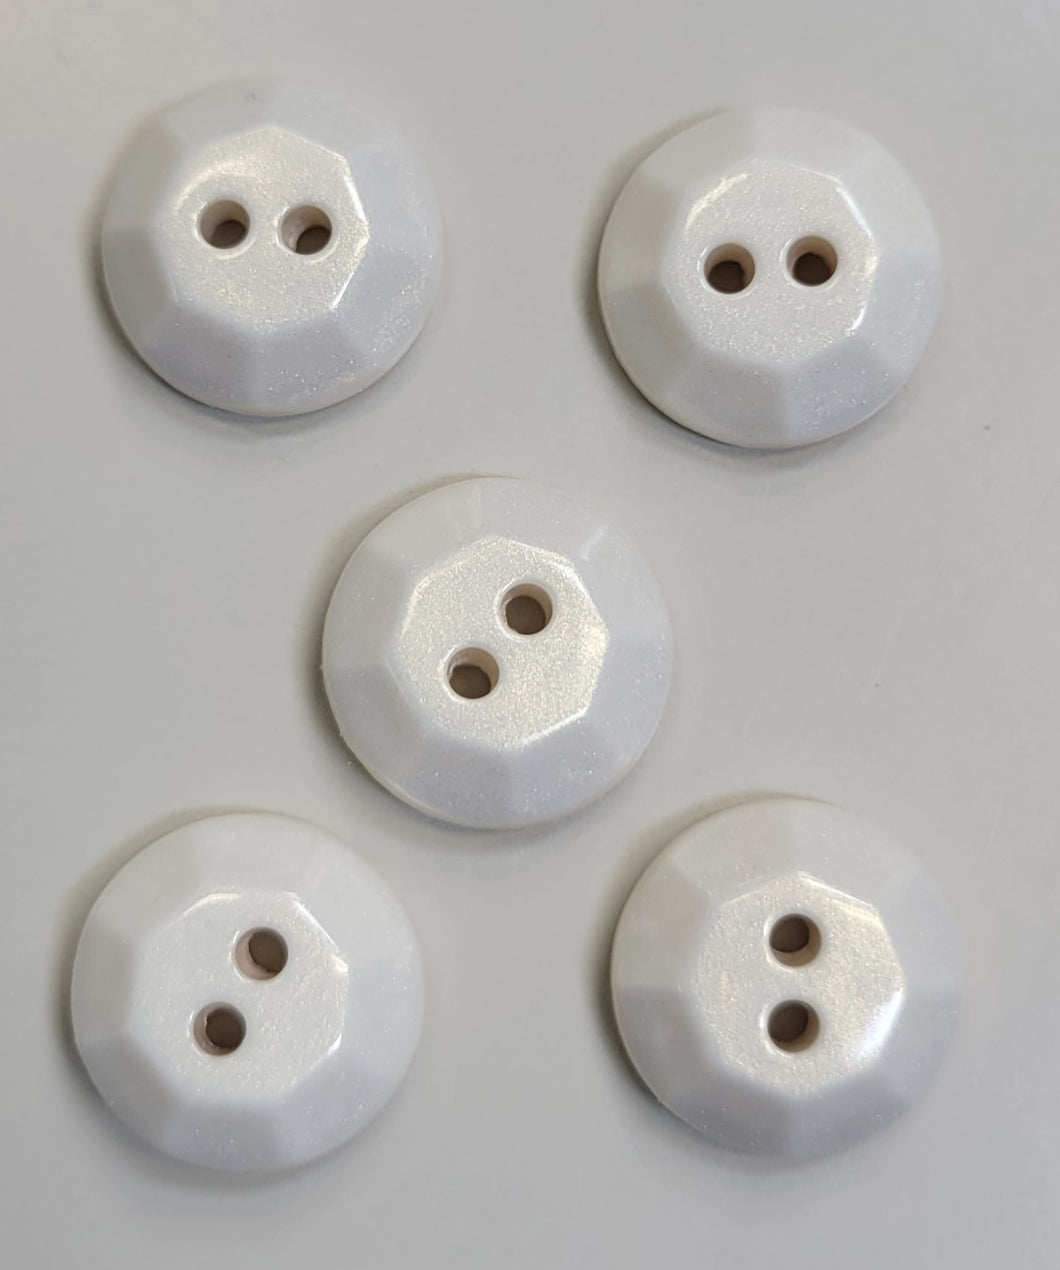 Octagon Buttons